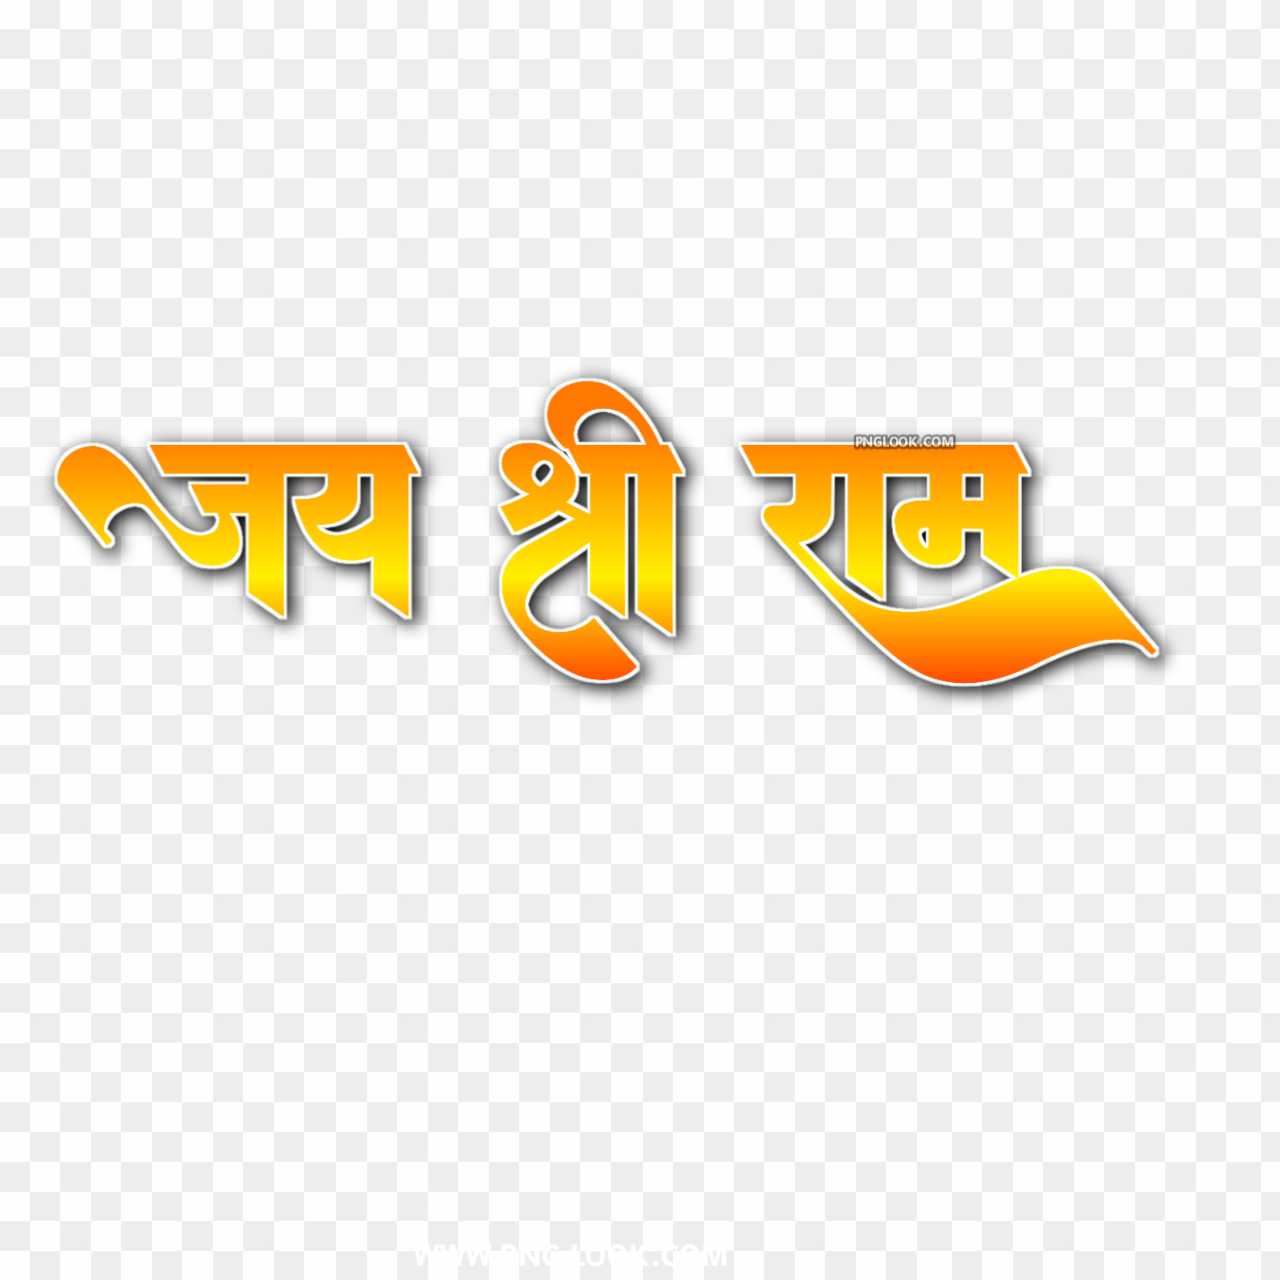 Jay Shri Ram in Hindi text PNG transparent image download